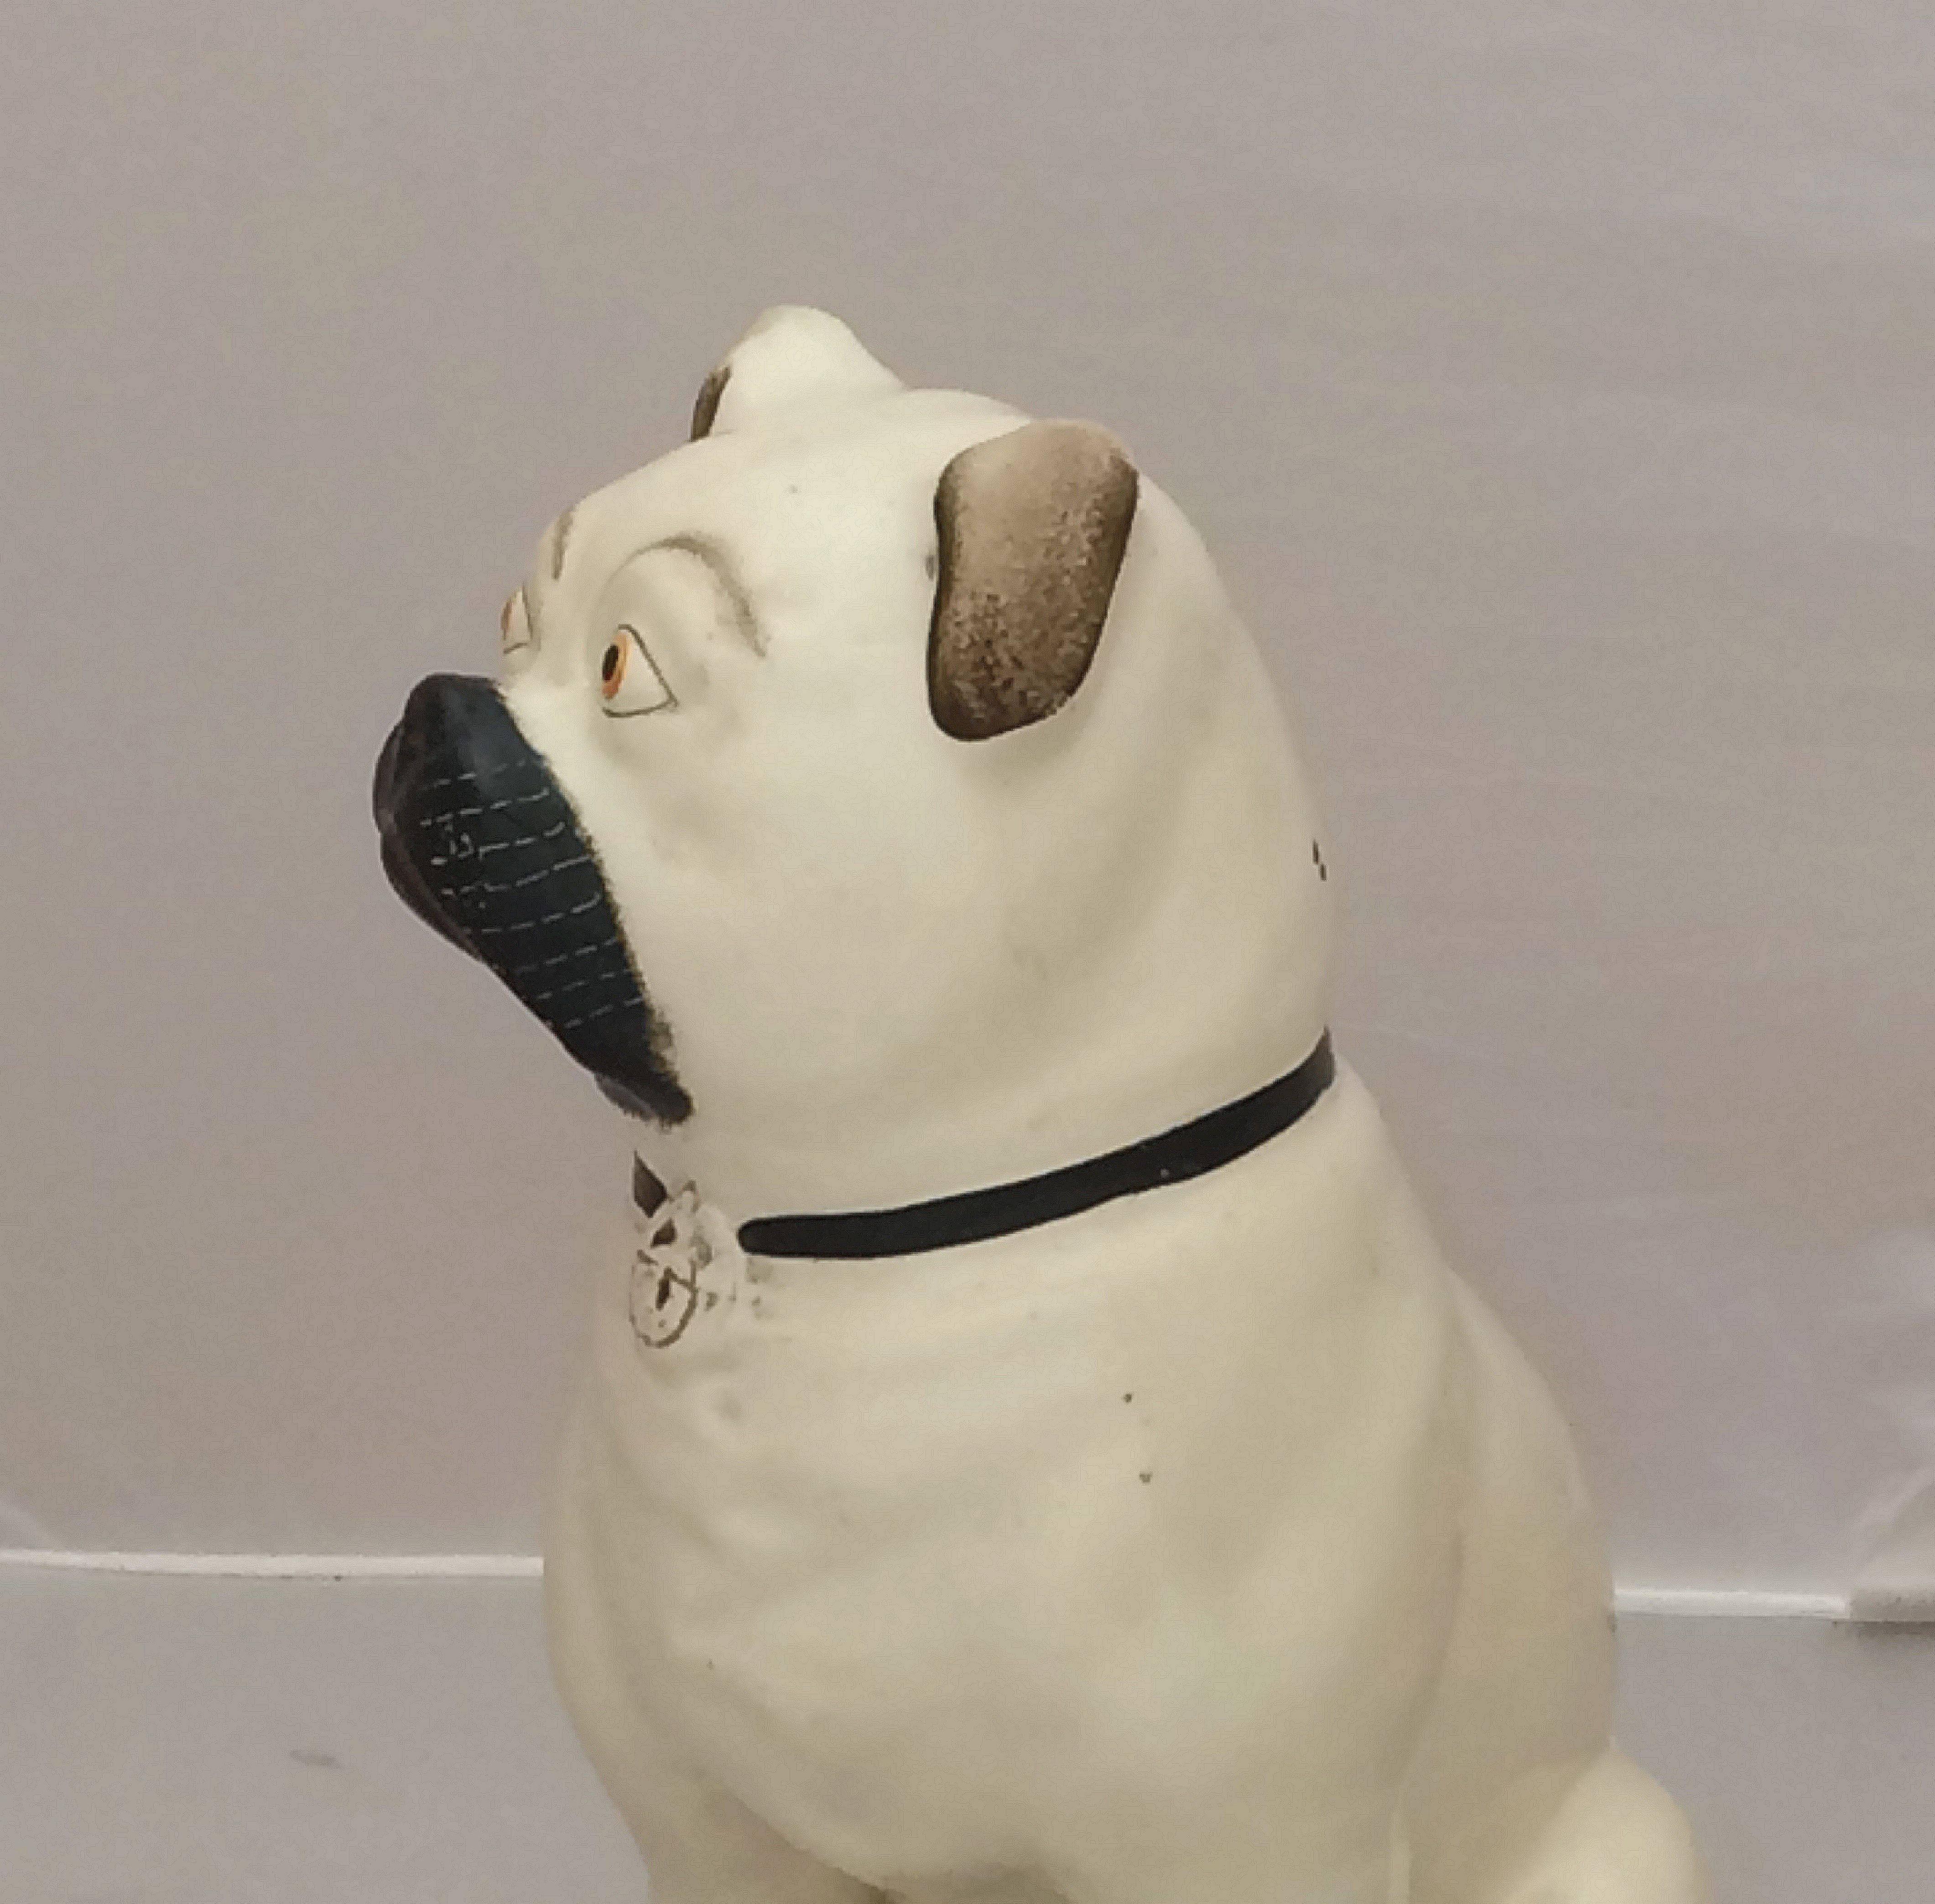 Ceramic Staffordshire Pug from 19th Century, England